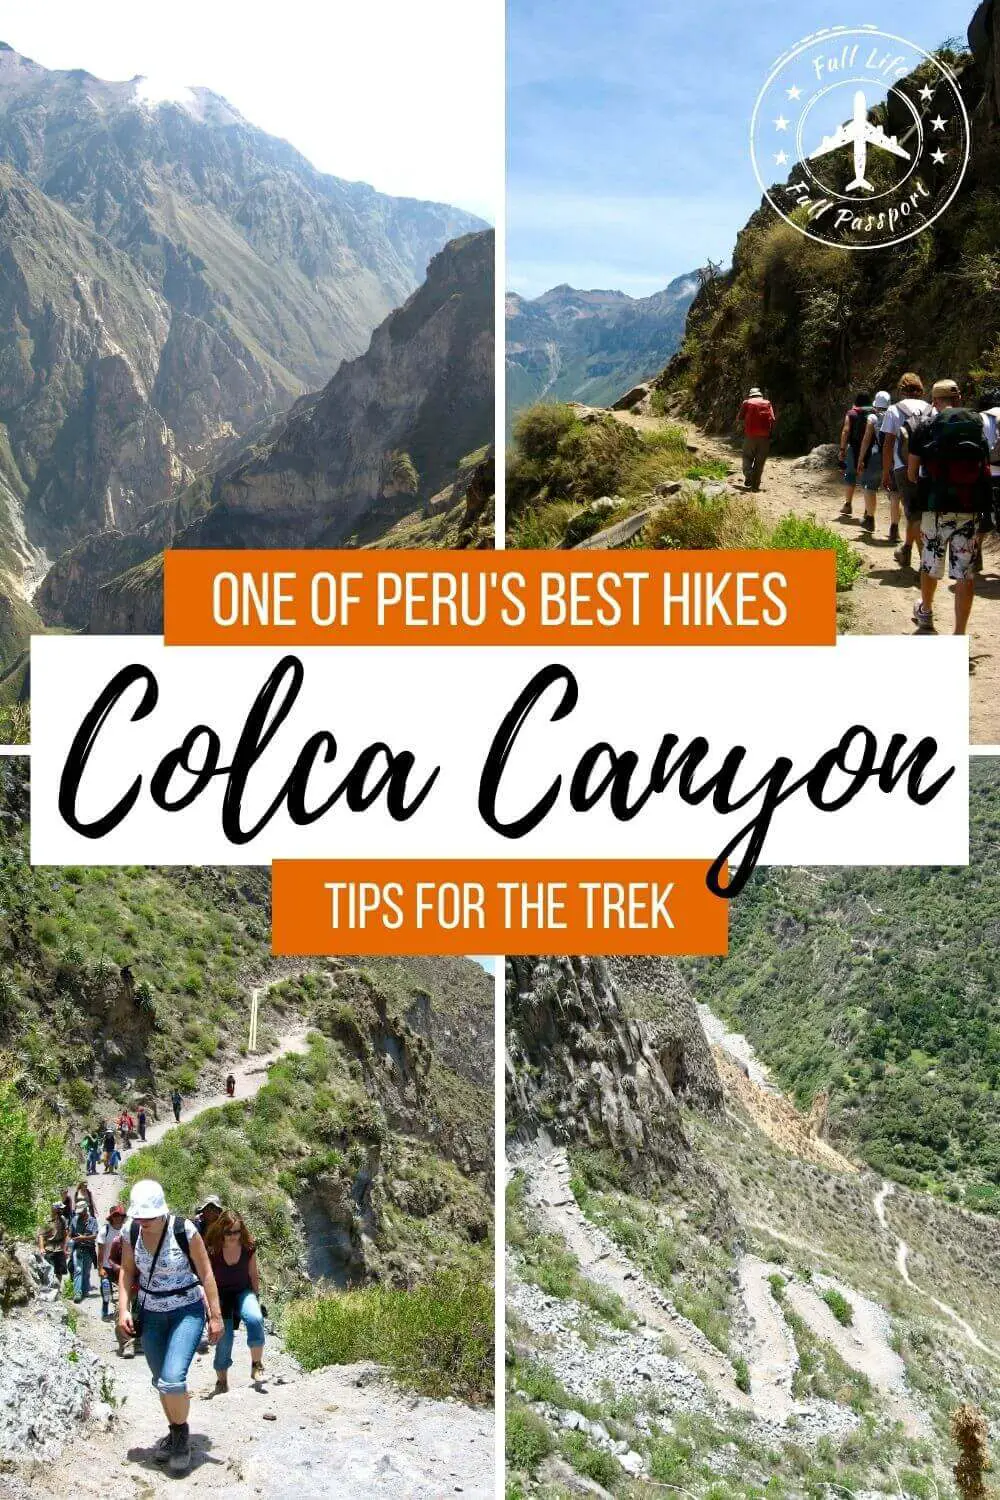 Colca Canyon, Peru: The Hike that Literally Took My Breath Away